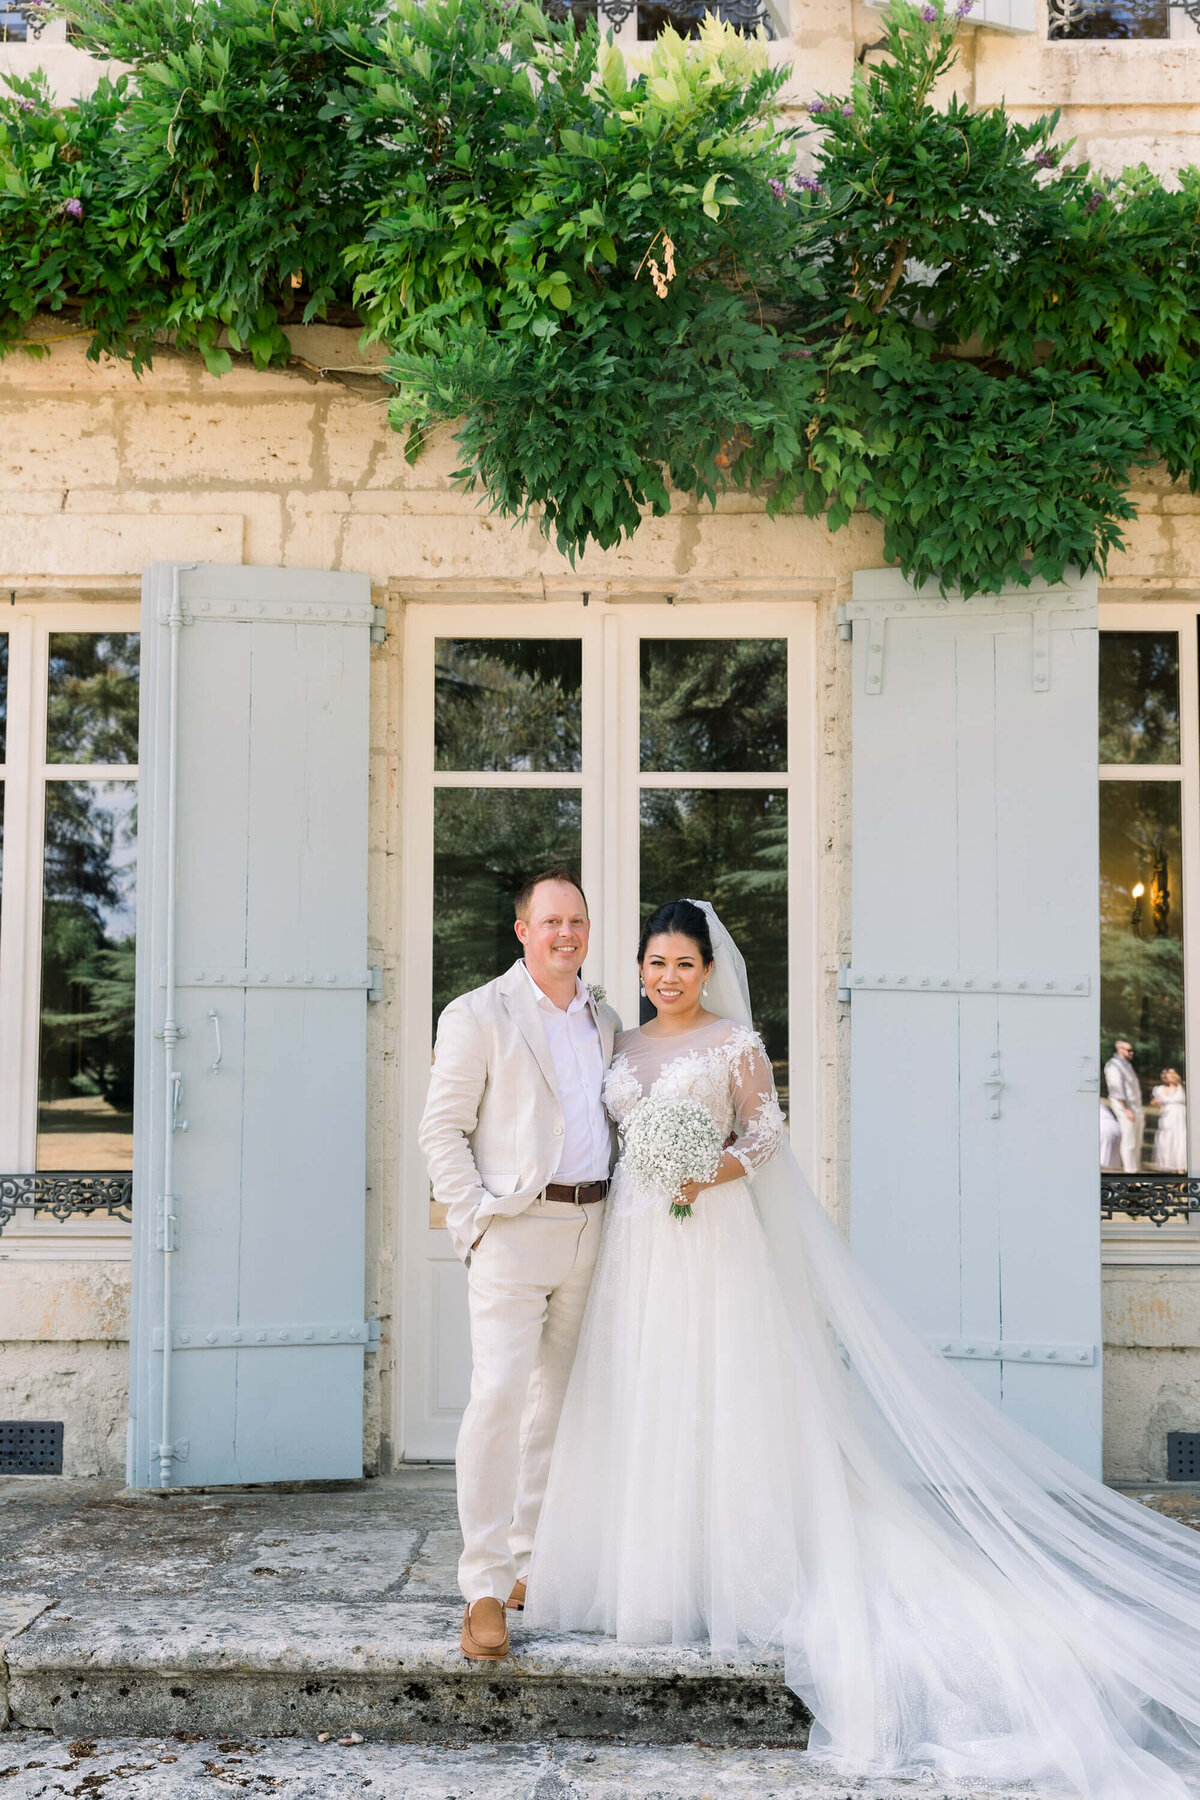 Victoria Engelen Flowers - A White Wedding in a French Chateau - JoannaandMattWedding_DariaLormanPhotography-533